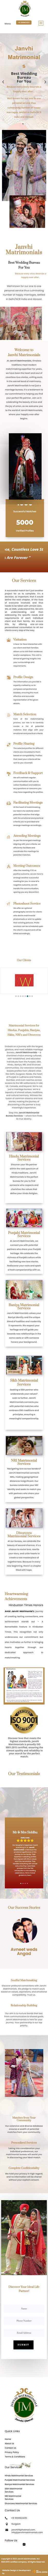 Janvhi Matrimonials mobile (2)